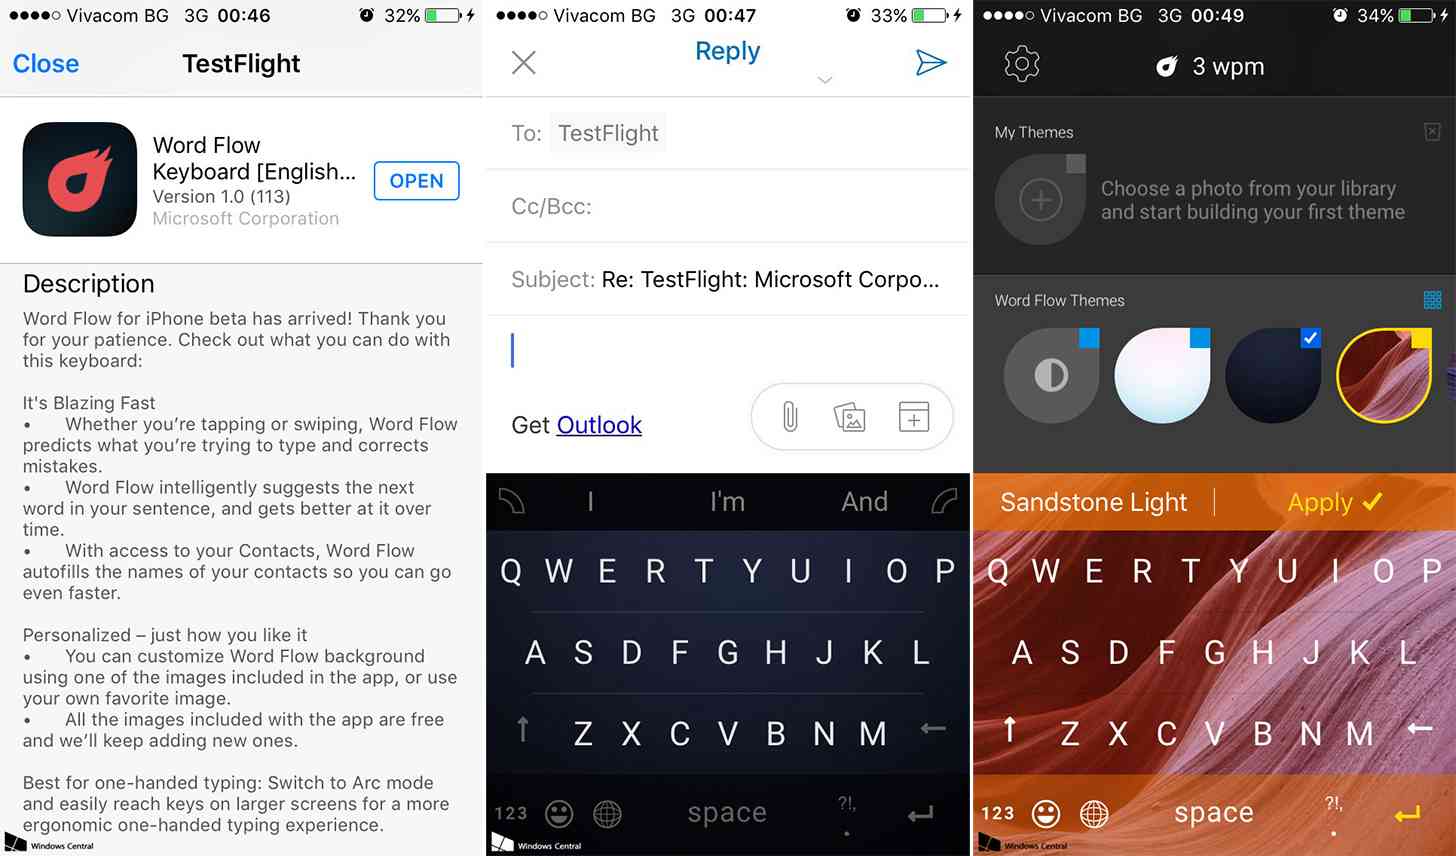 Microsoft Word Flow for iPhone keyboard app screenshots